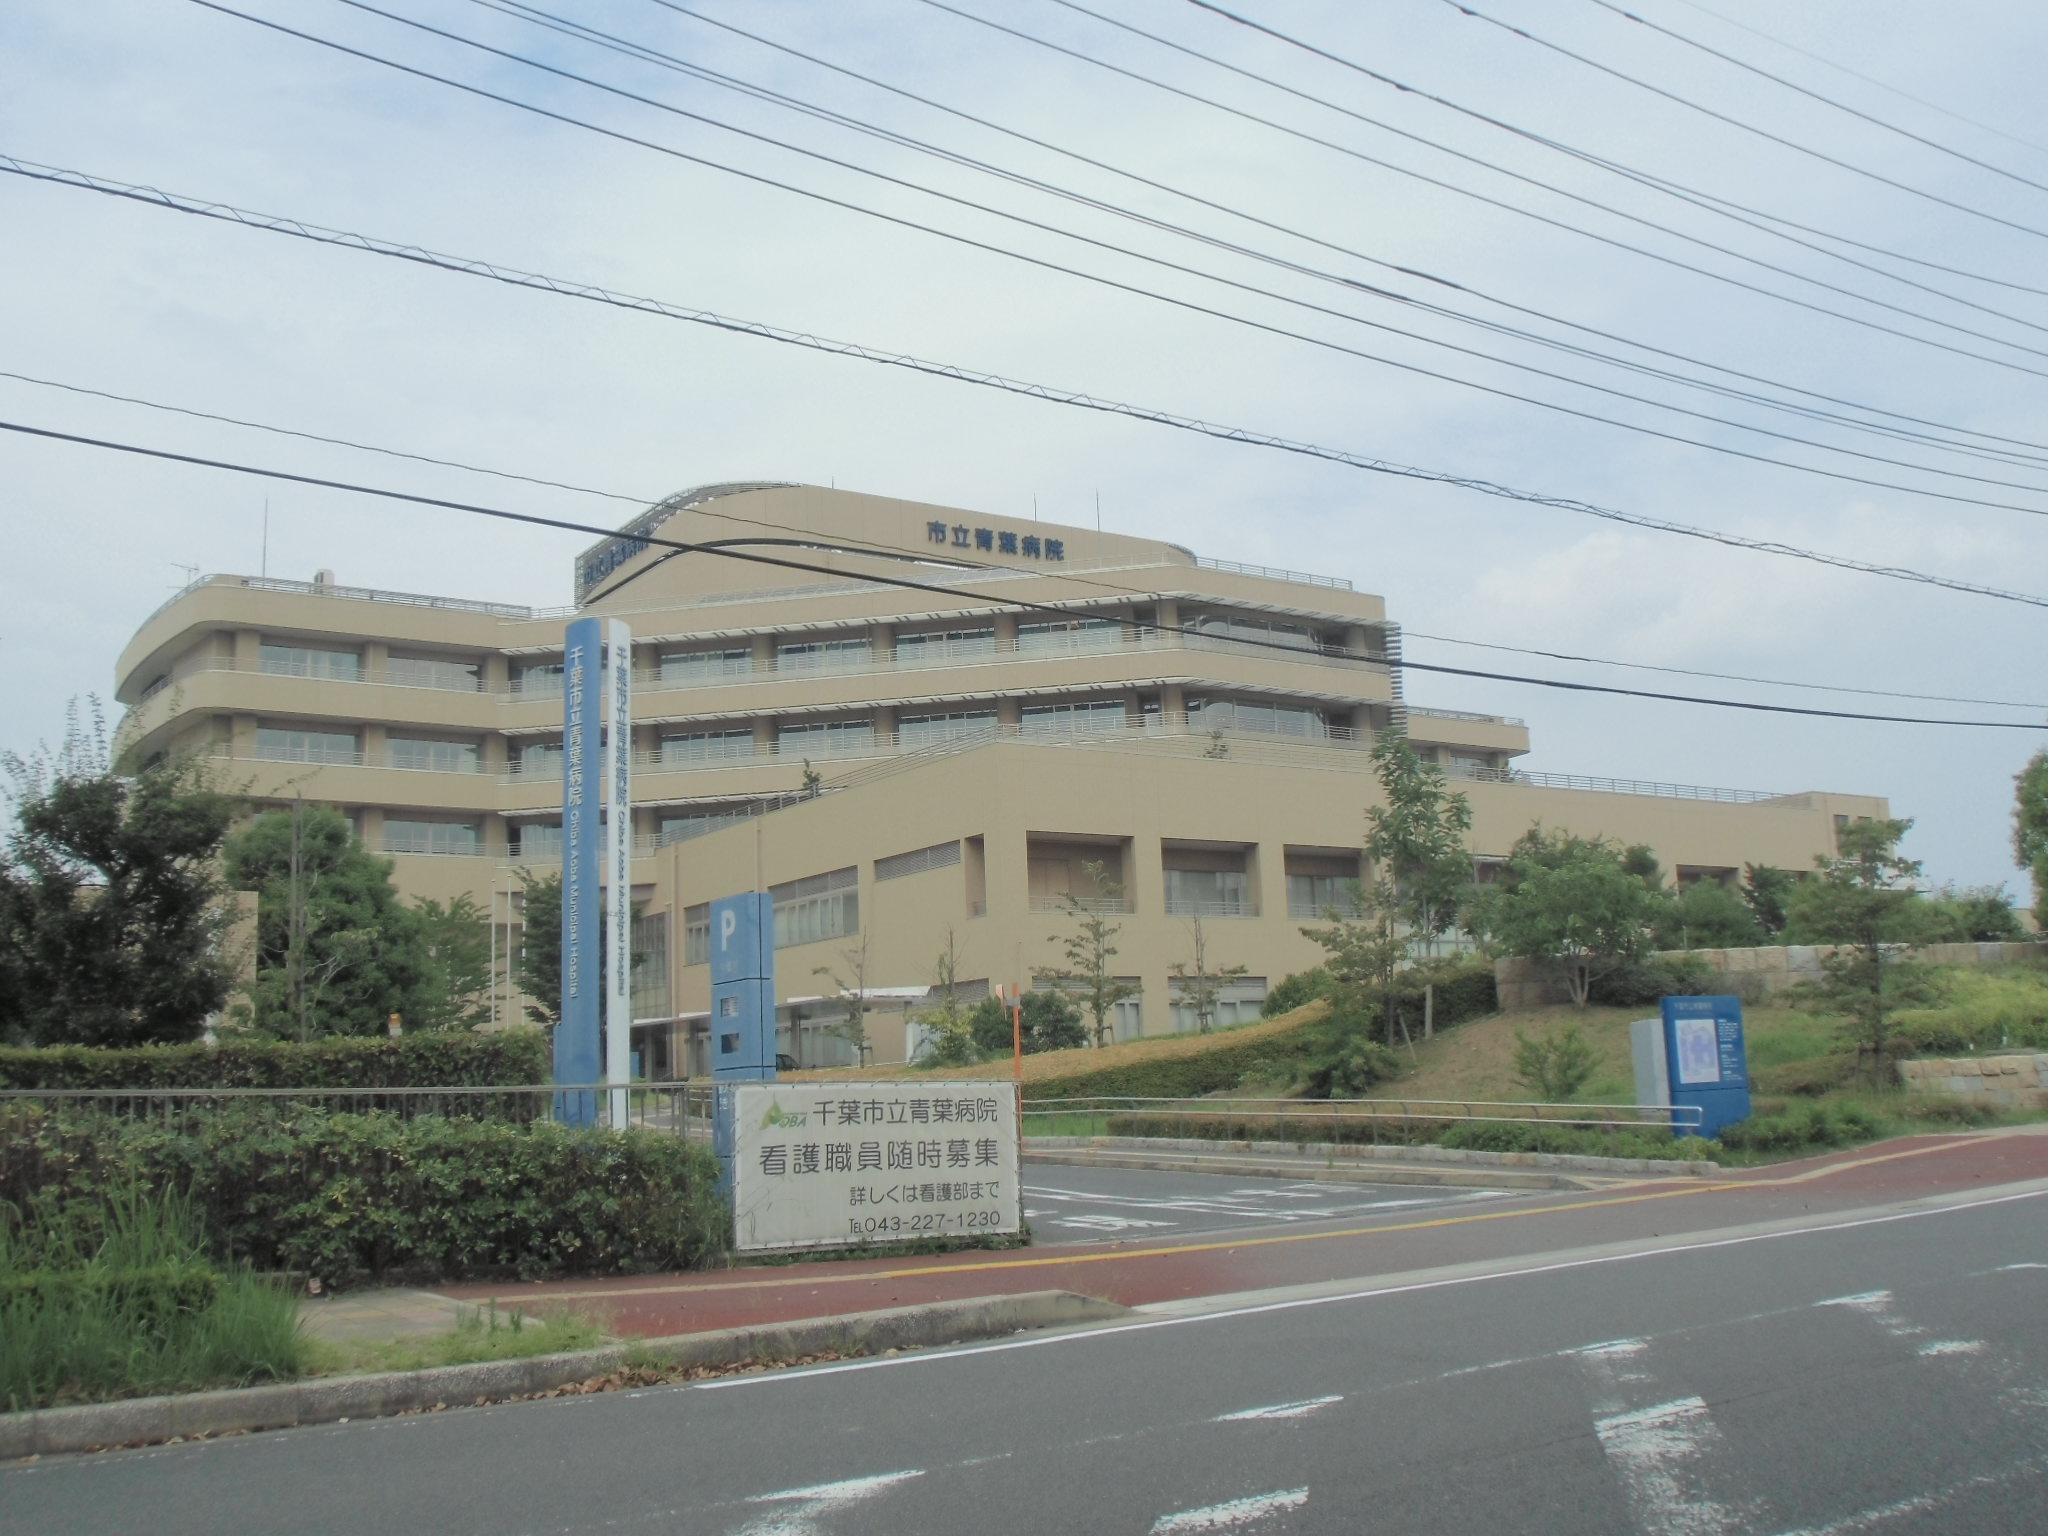 Hospital. 1248m to the Chiba Municipal Aoba Hospital (Hospital)